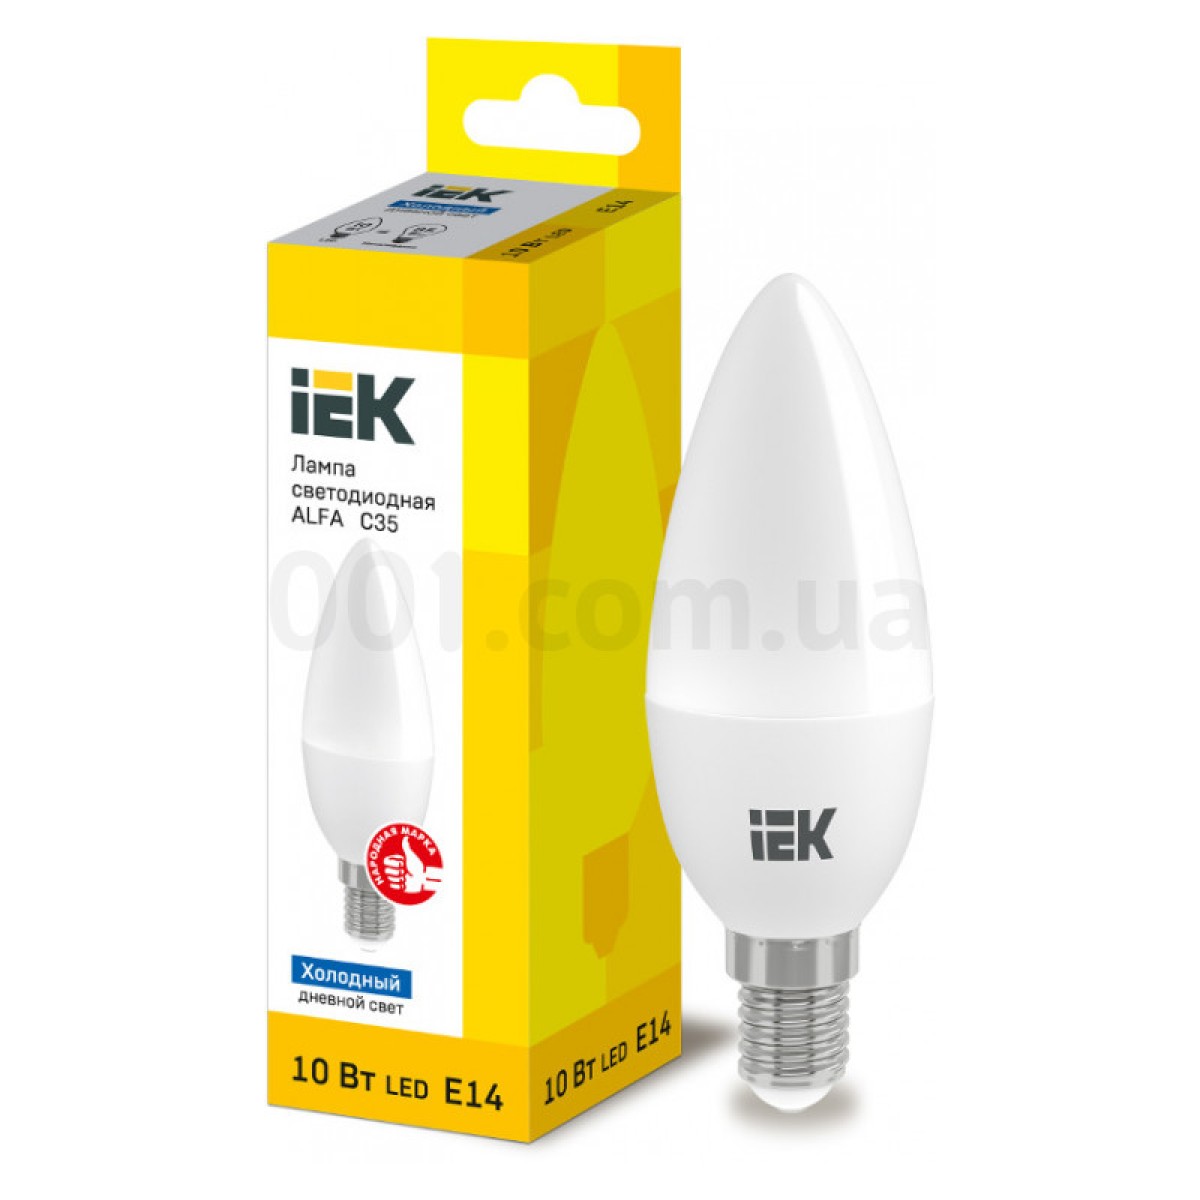 Светодиодная лампа LED ALFA C35 (свеча) 10 Вт 230В 6500К E14, IEK 256_256.jpg